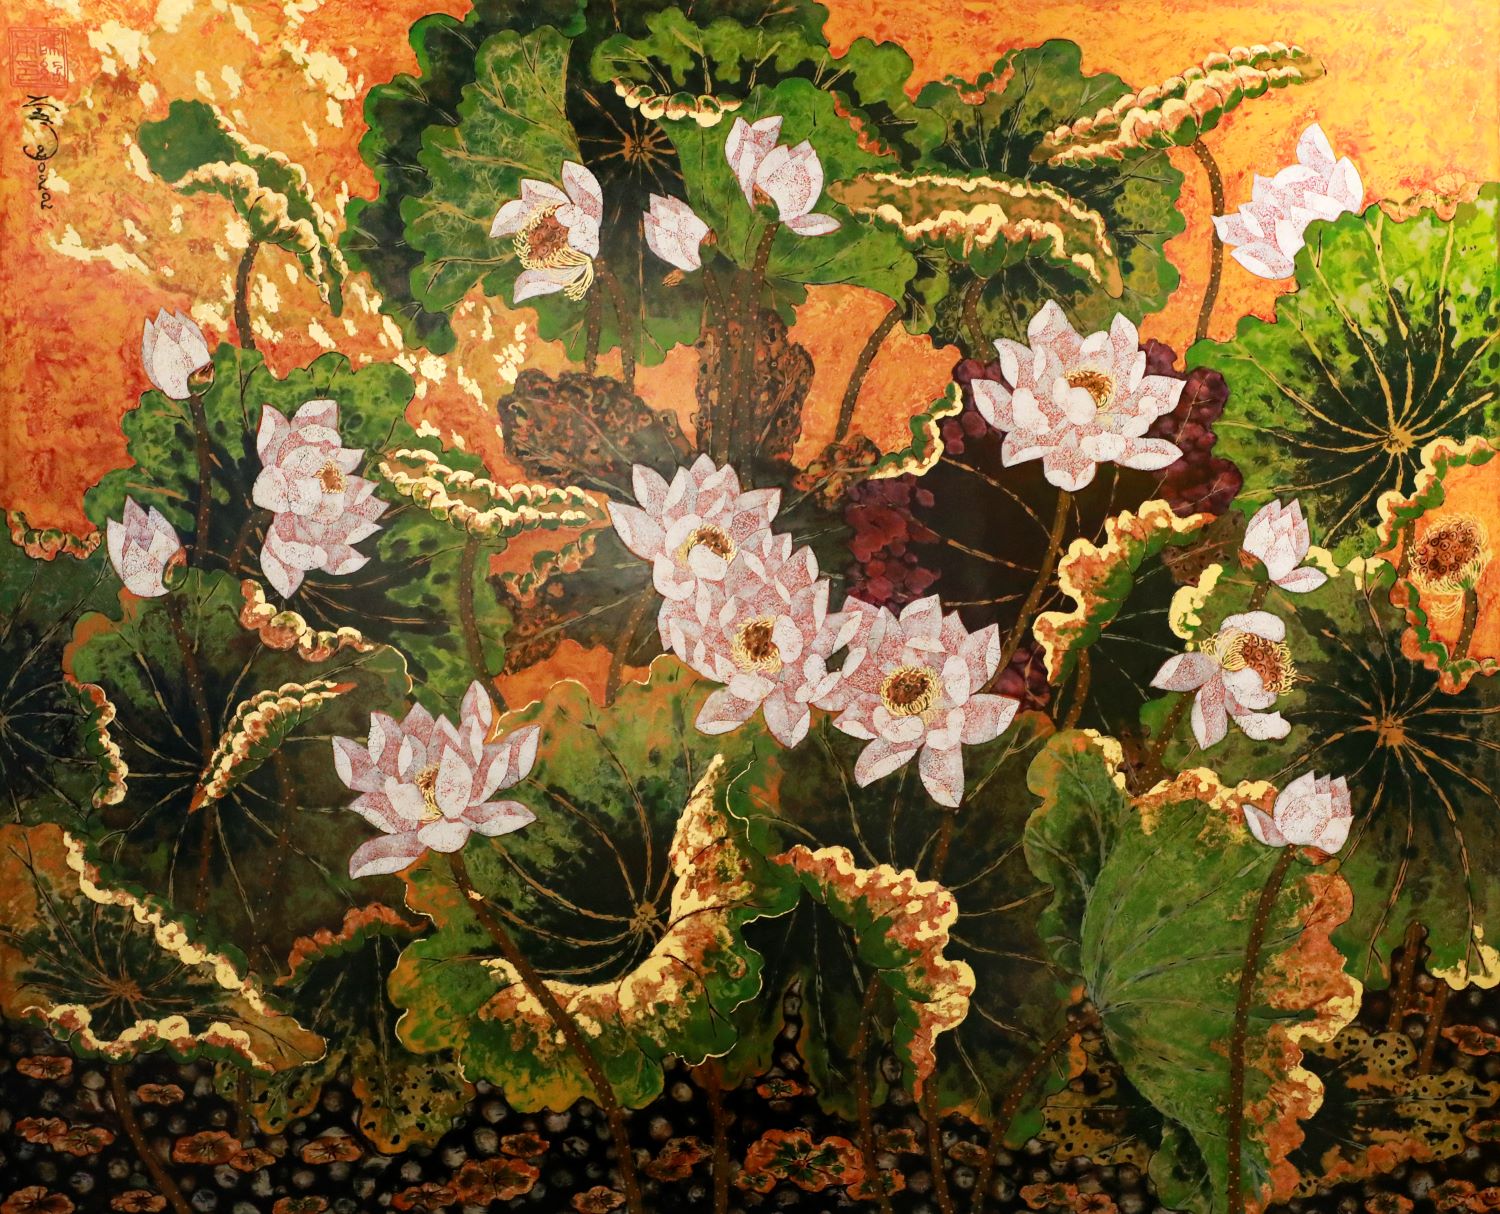 Lotus at Dawn - Vietnamese Lacquer Painting by Artist Tran Thieu Nam